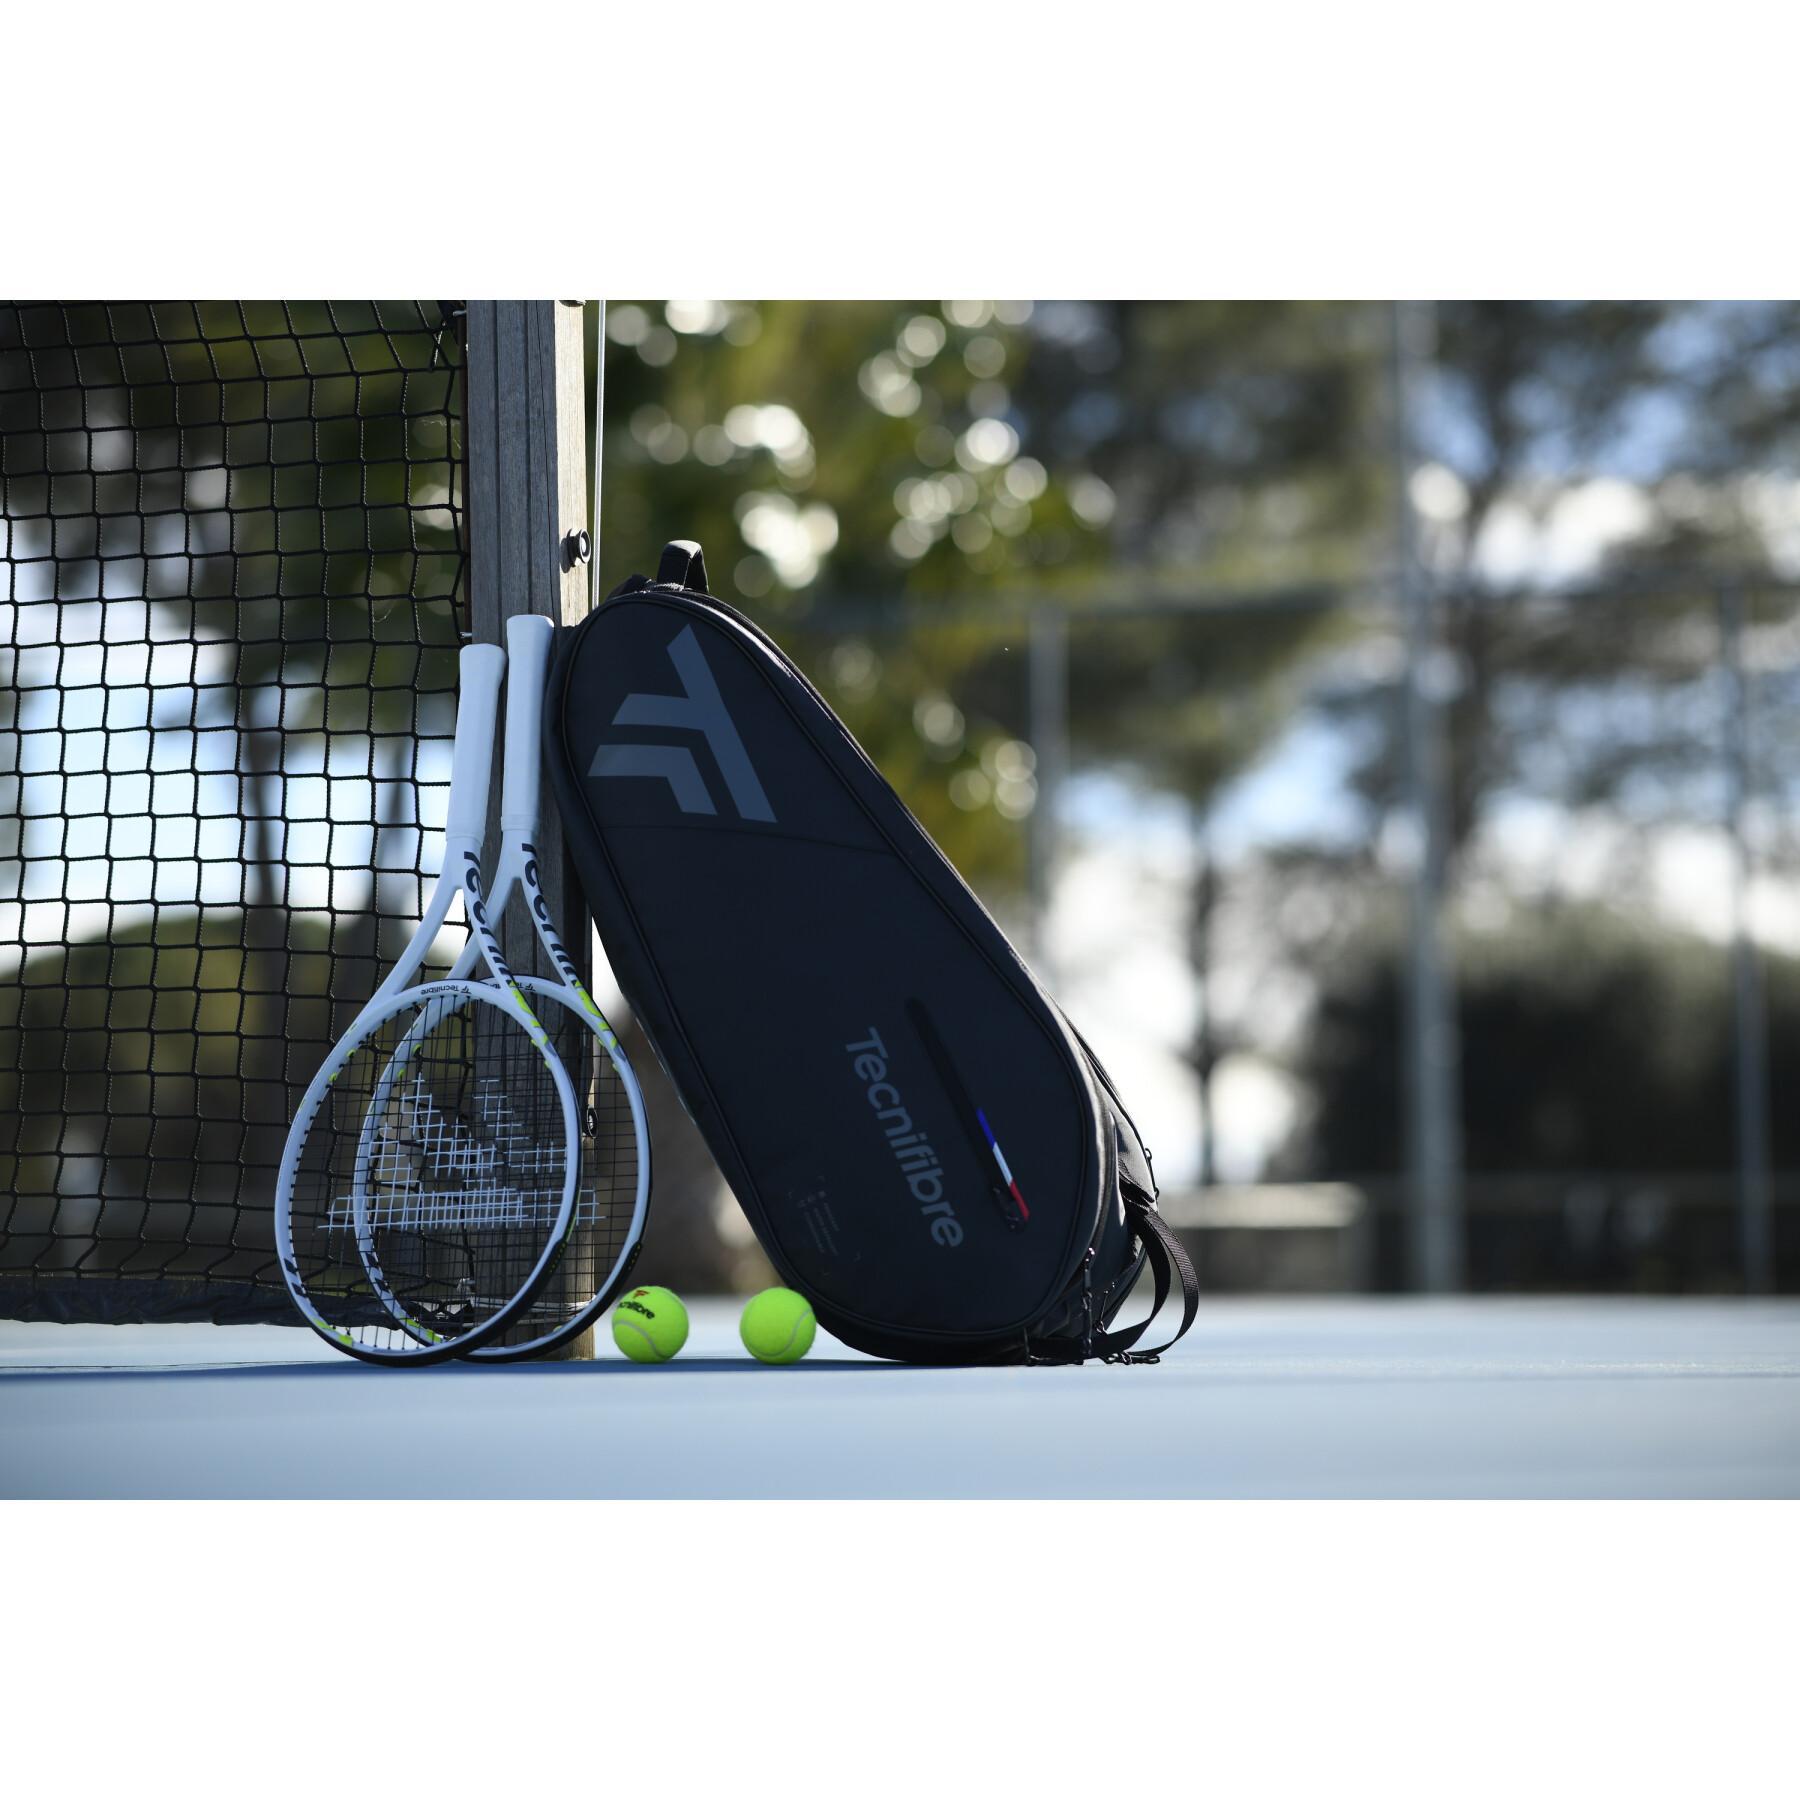 Tennis racket bag Tecnifibre Team Dry 12R